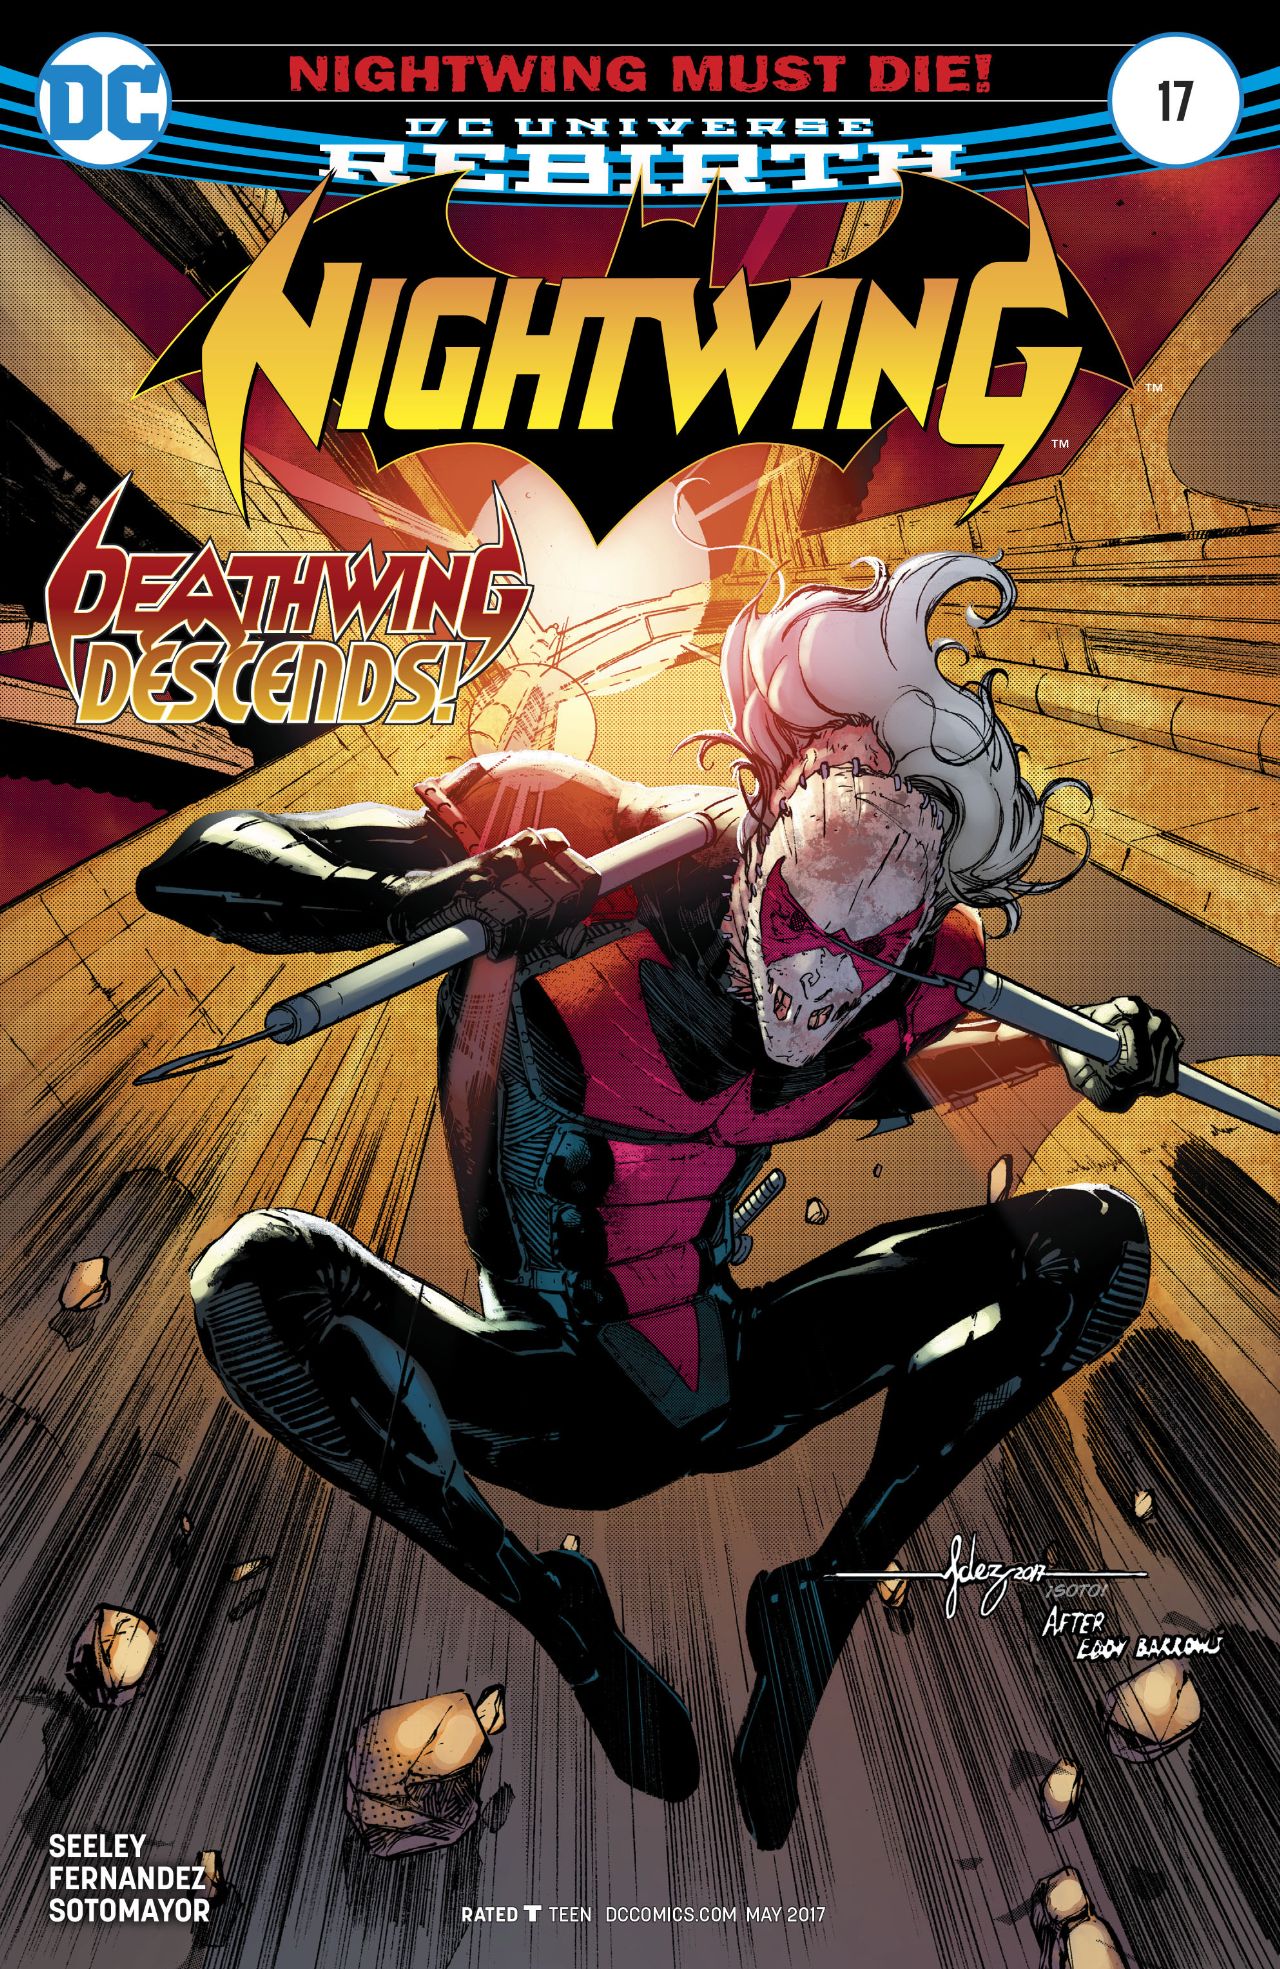 DC COMICS//2017 NIGHTWING #17 REBIRTH IVAN REIS VARIANT COVER